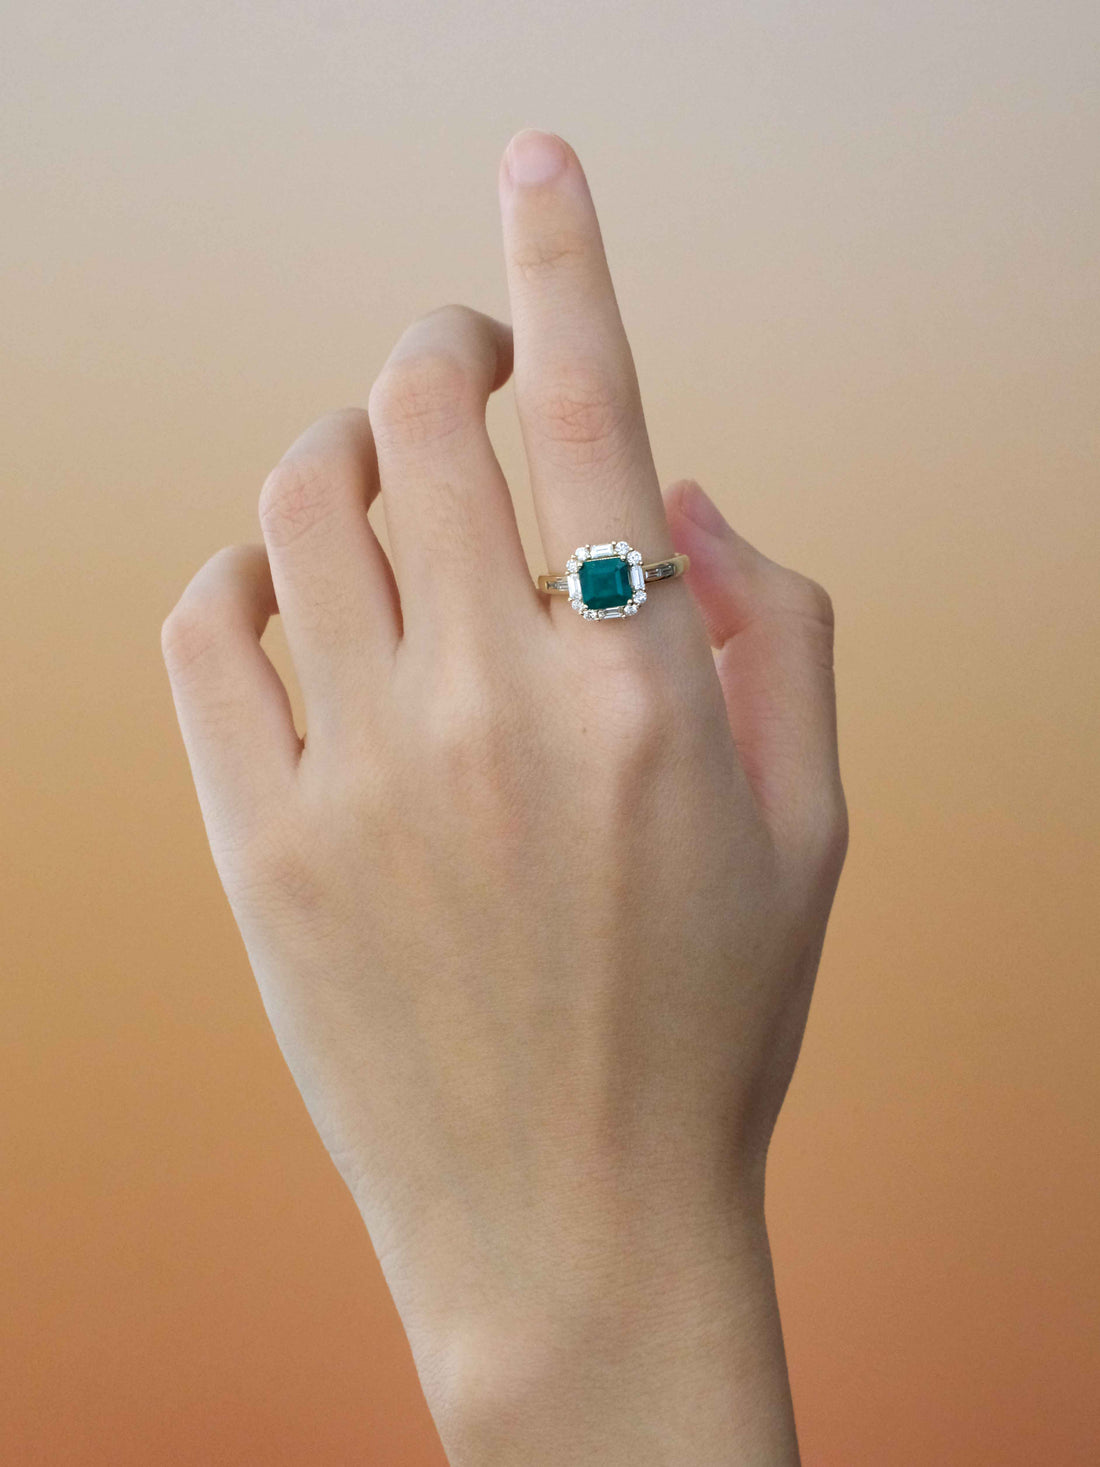 Octagonal Emerald Diamond Ring, 18k solid gold